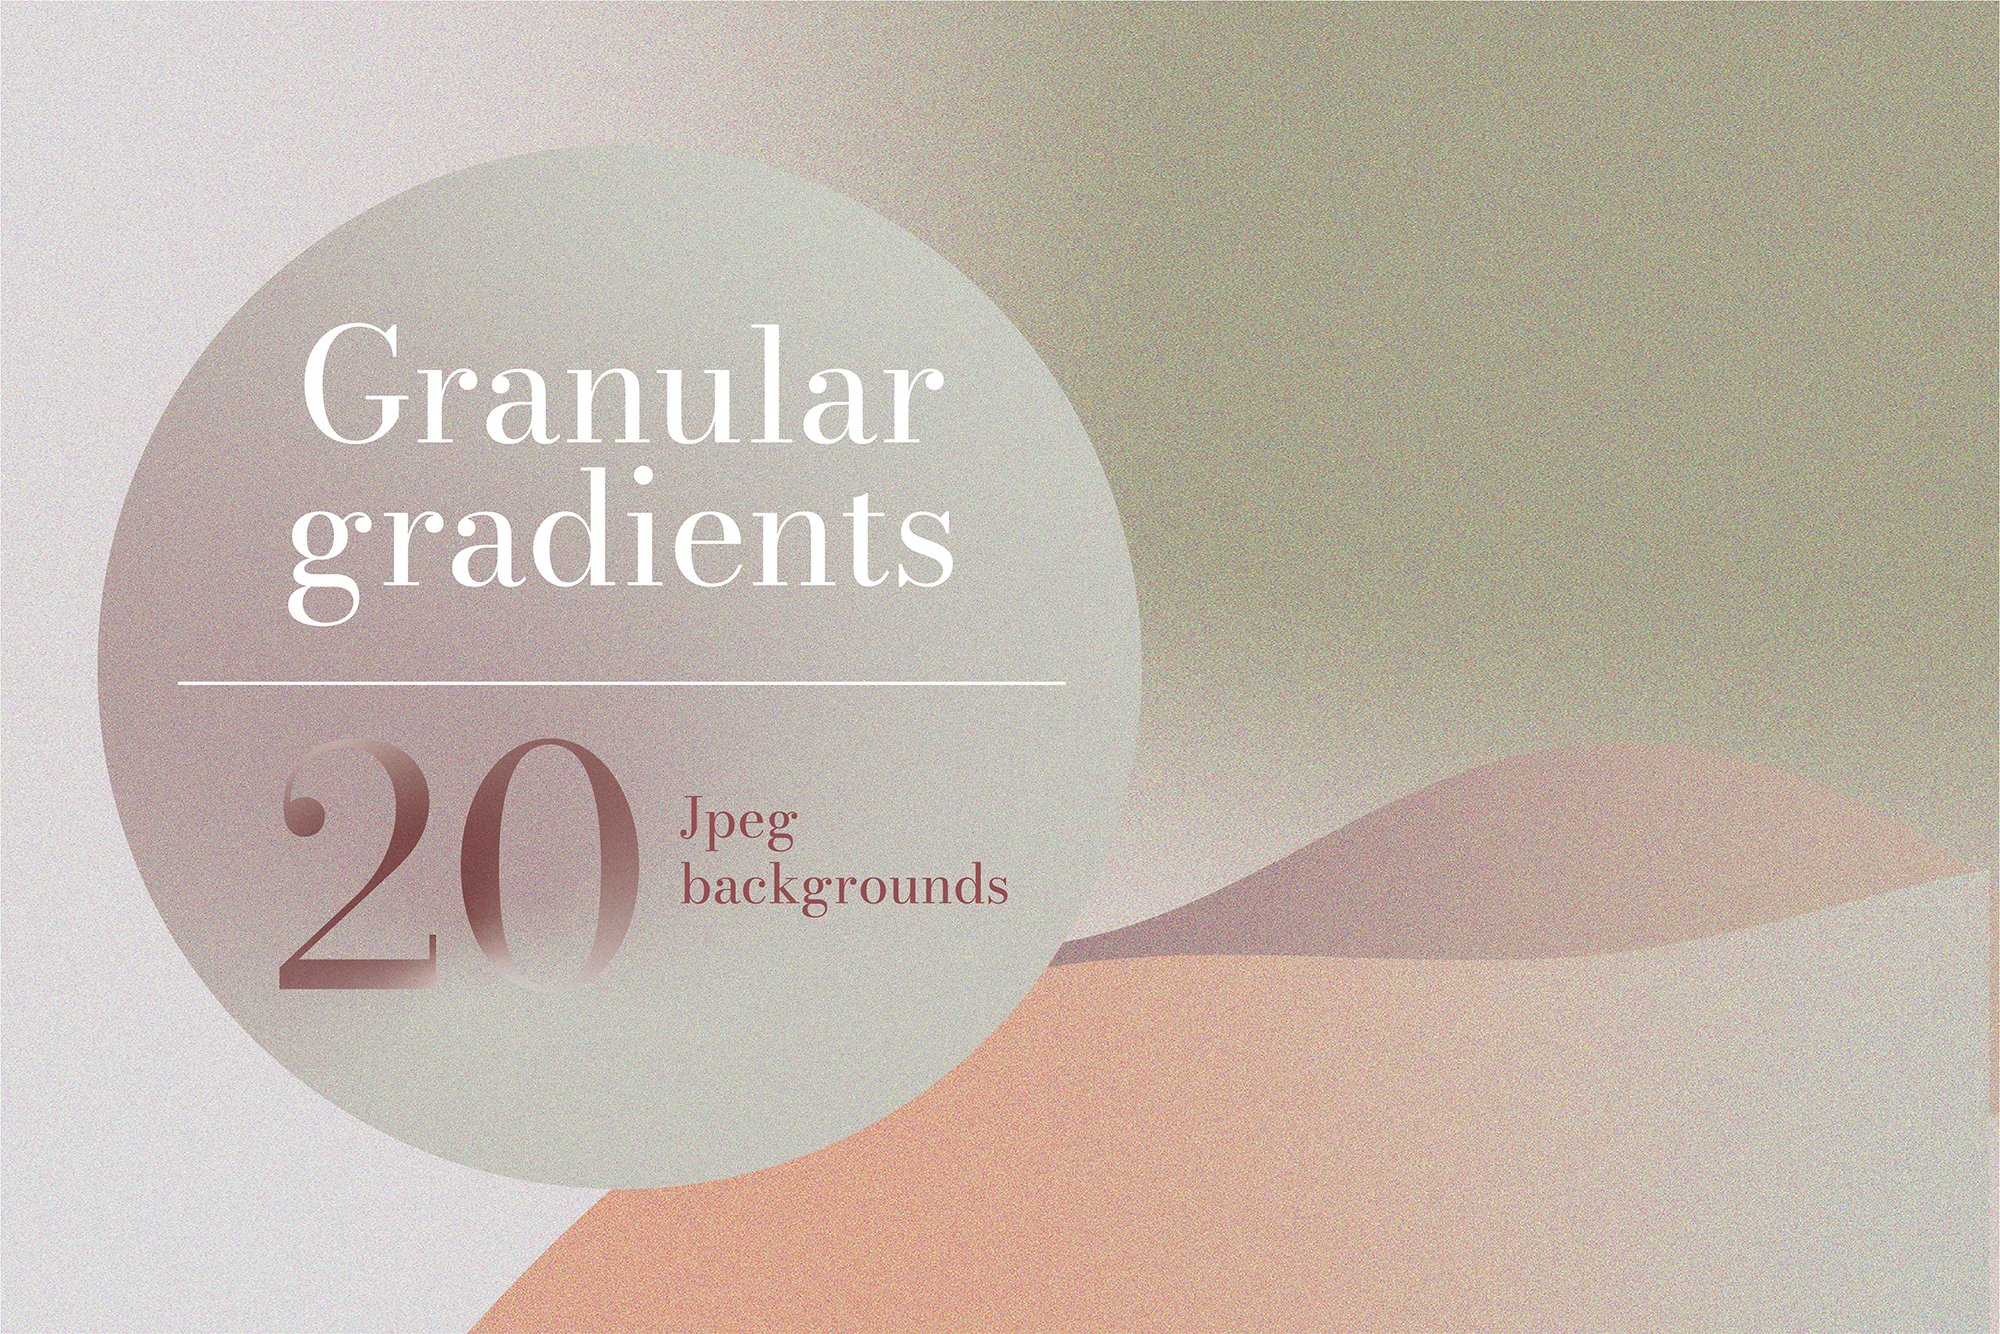 Granular Gradientscover image.